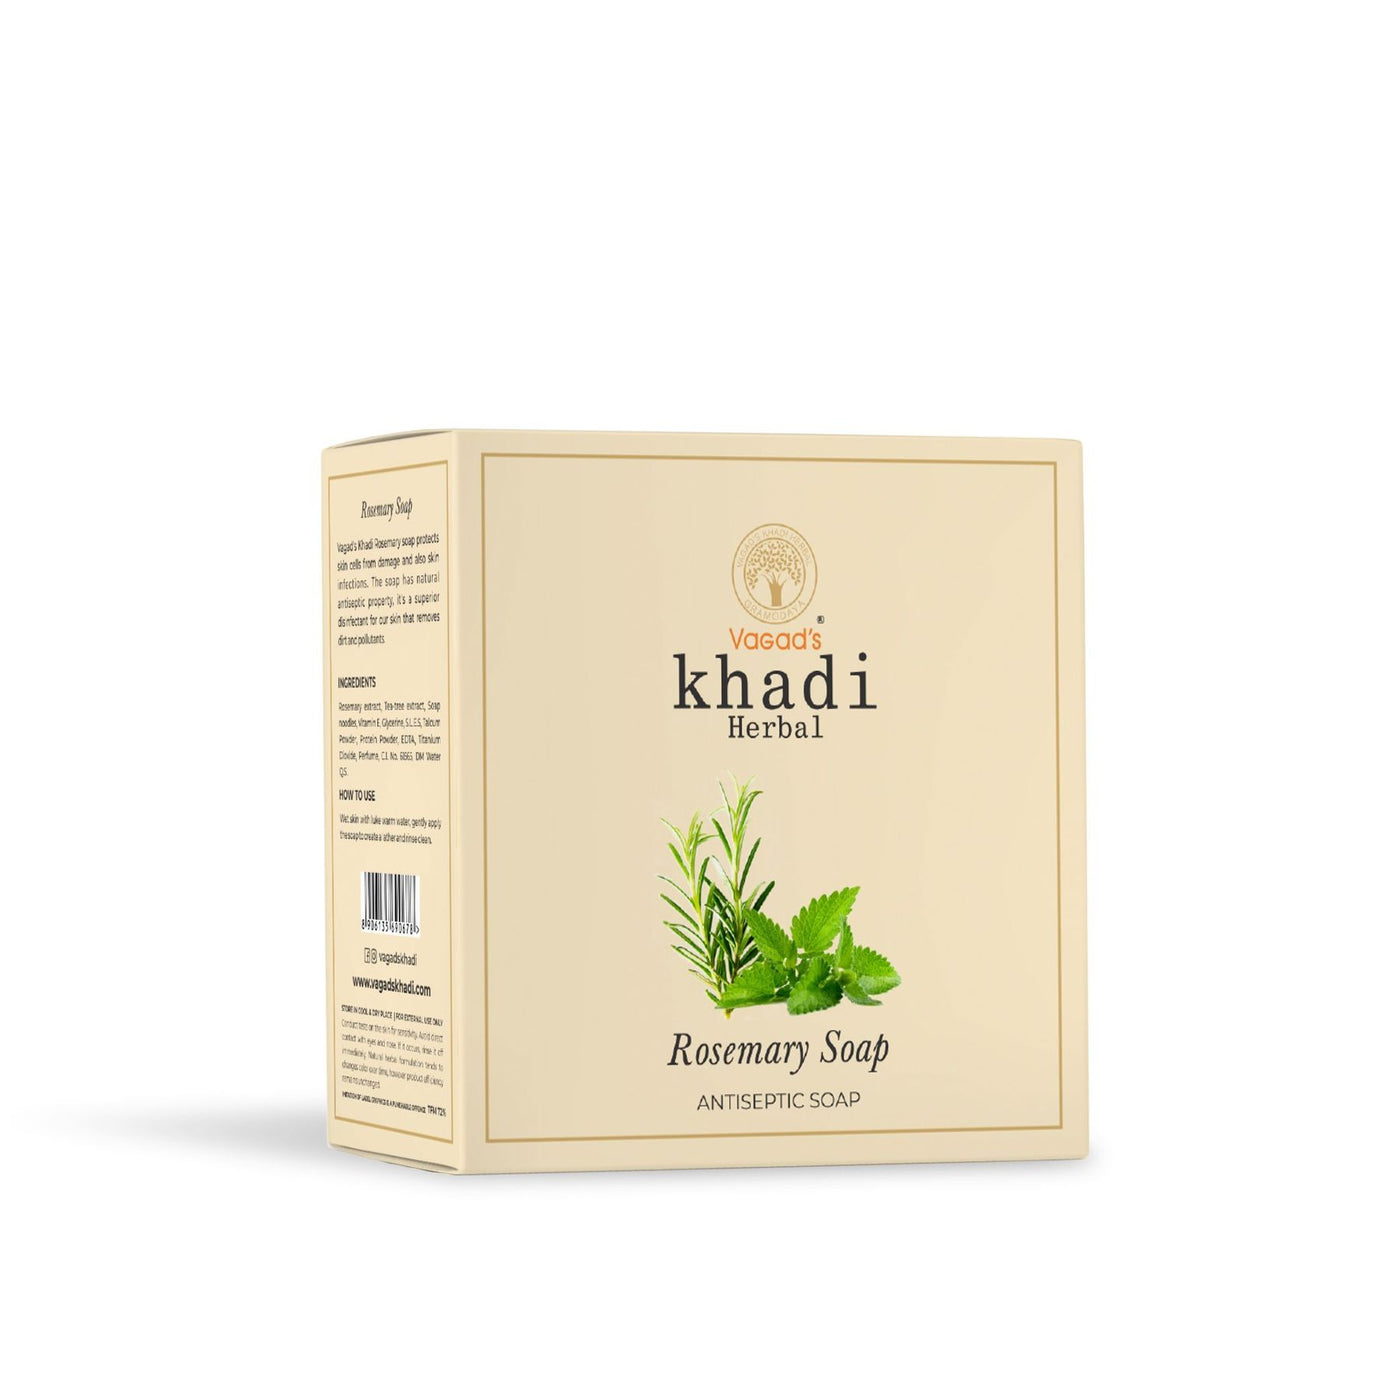 Vagad's Khadi Rosemary Soap (Pack of 3)